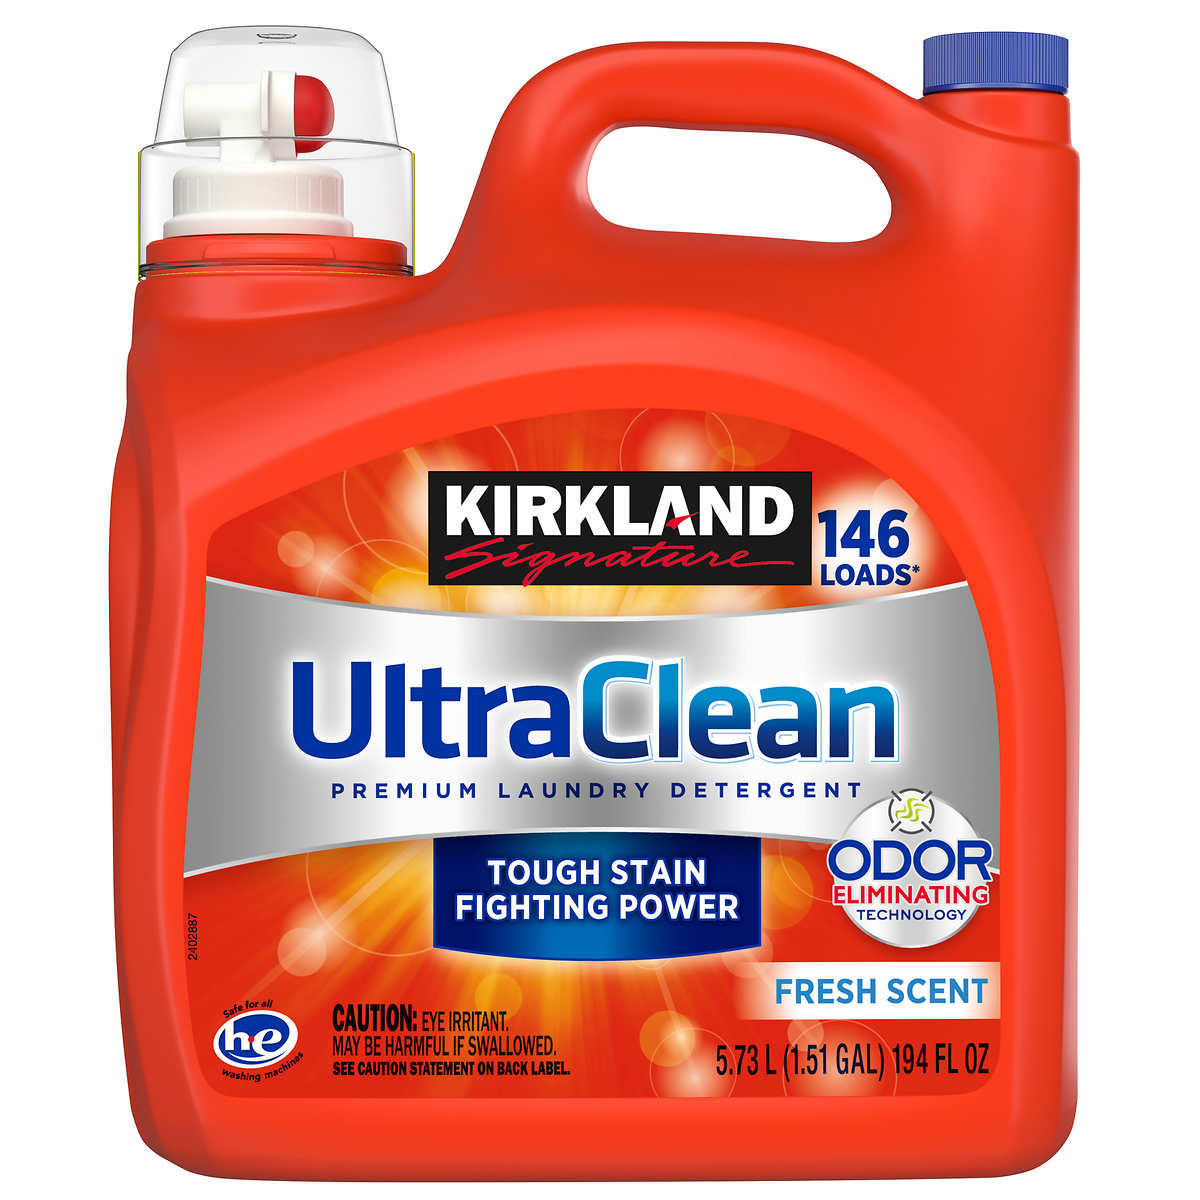 Kirkland Signature Ultra Clean HE Liquid Laundry Detergent 146 loads 194 fl oz